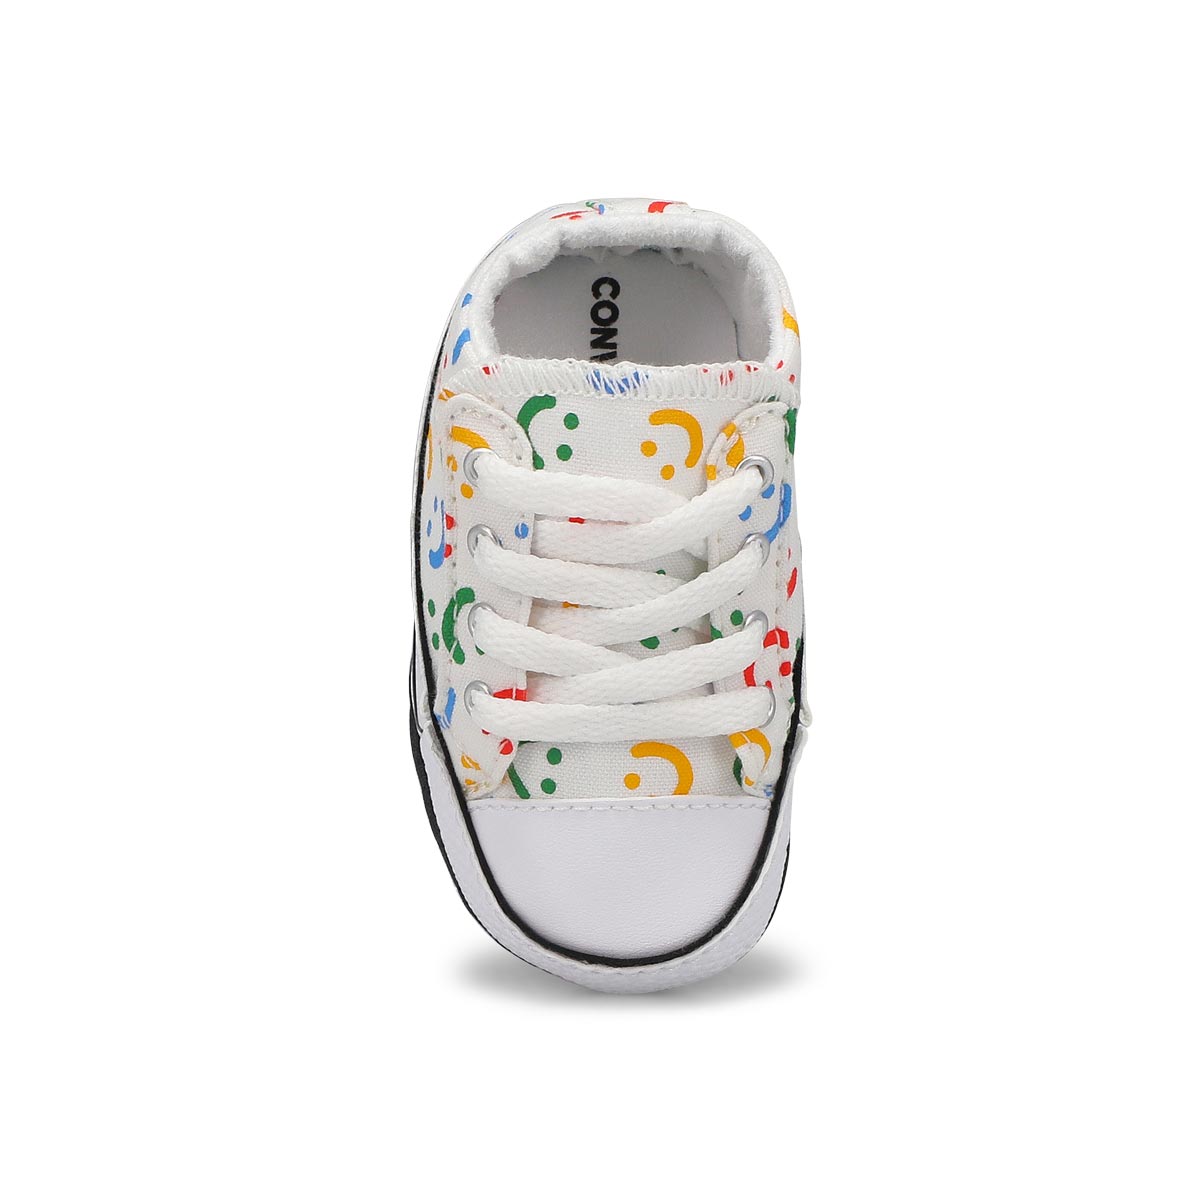 Infants' Chuck Taylor All Star Cribster Polka Doodle Sneaker - White/Fever Dream/White